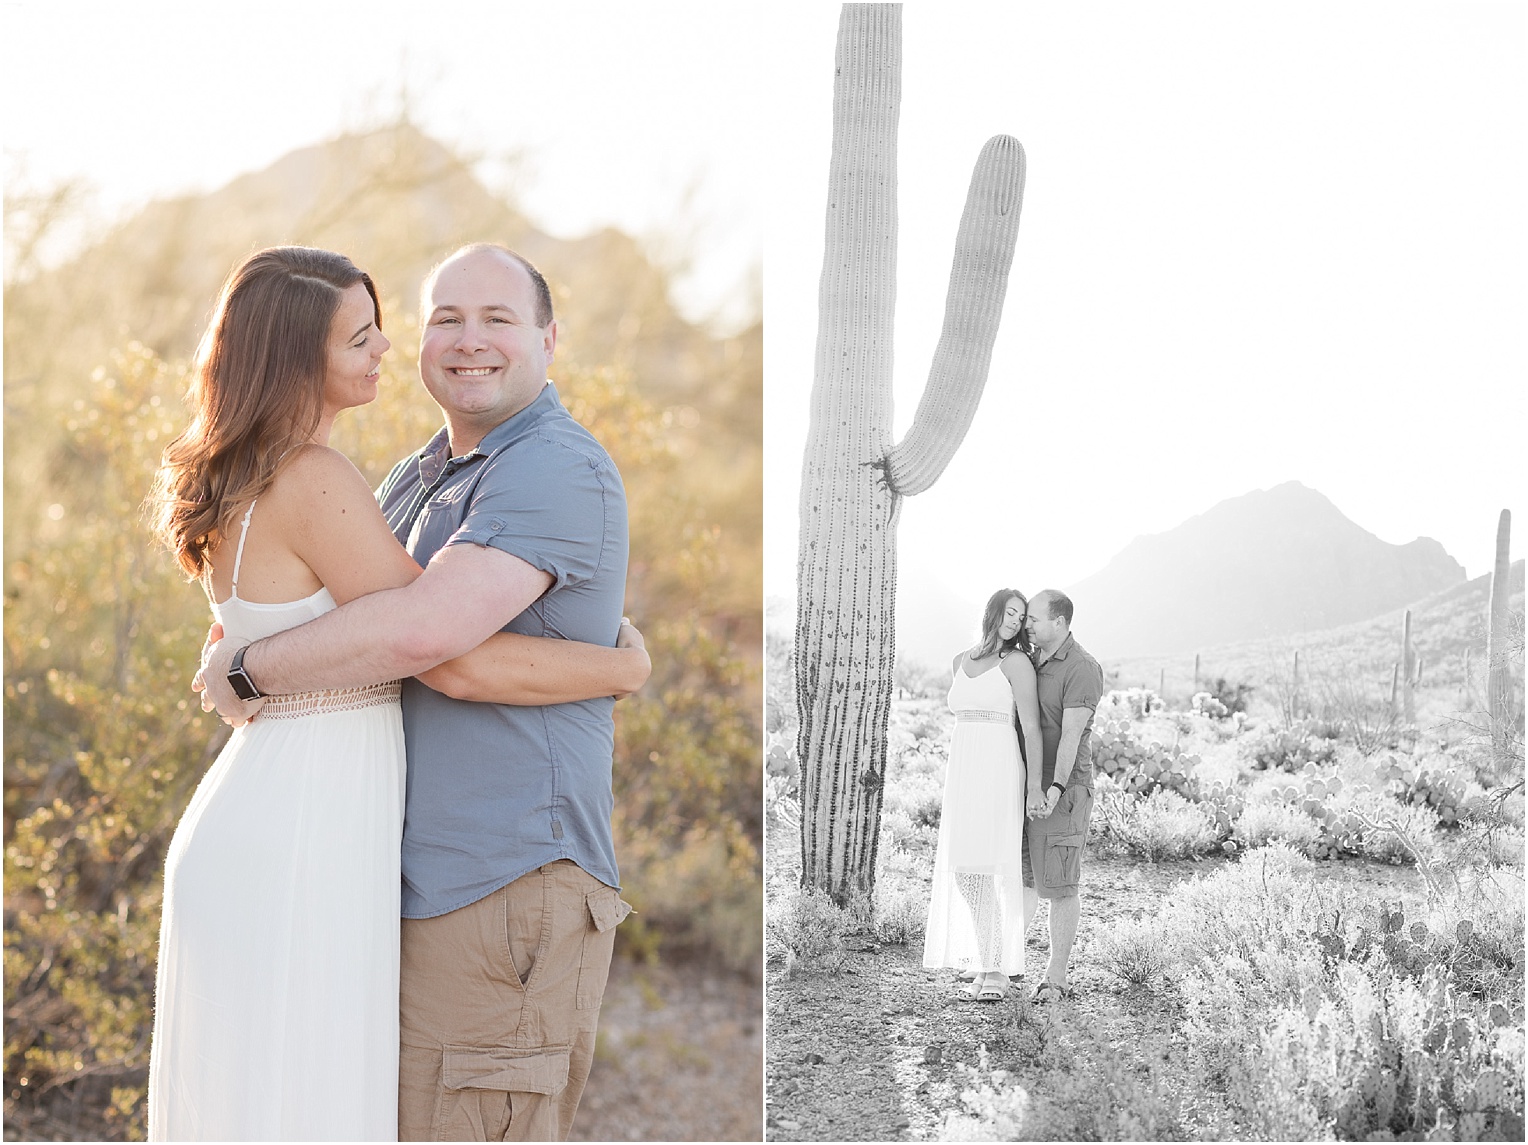 Sunrise Desert Couples Session Tucson Arizona Emilee + Charlie maxi dress engagement outfit